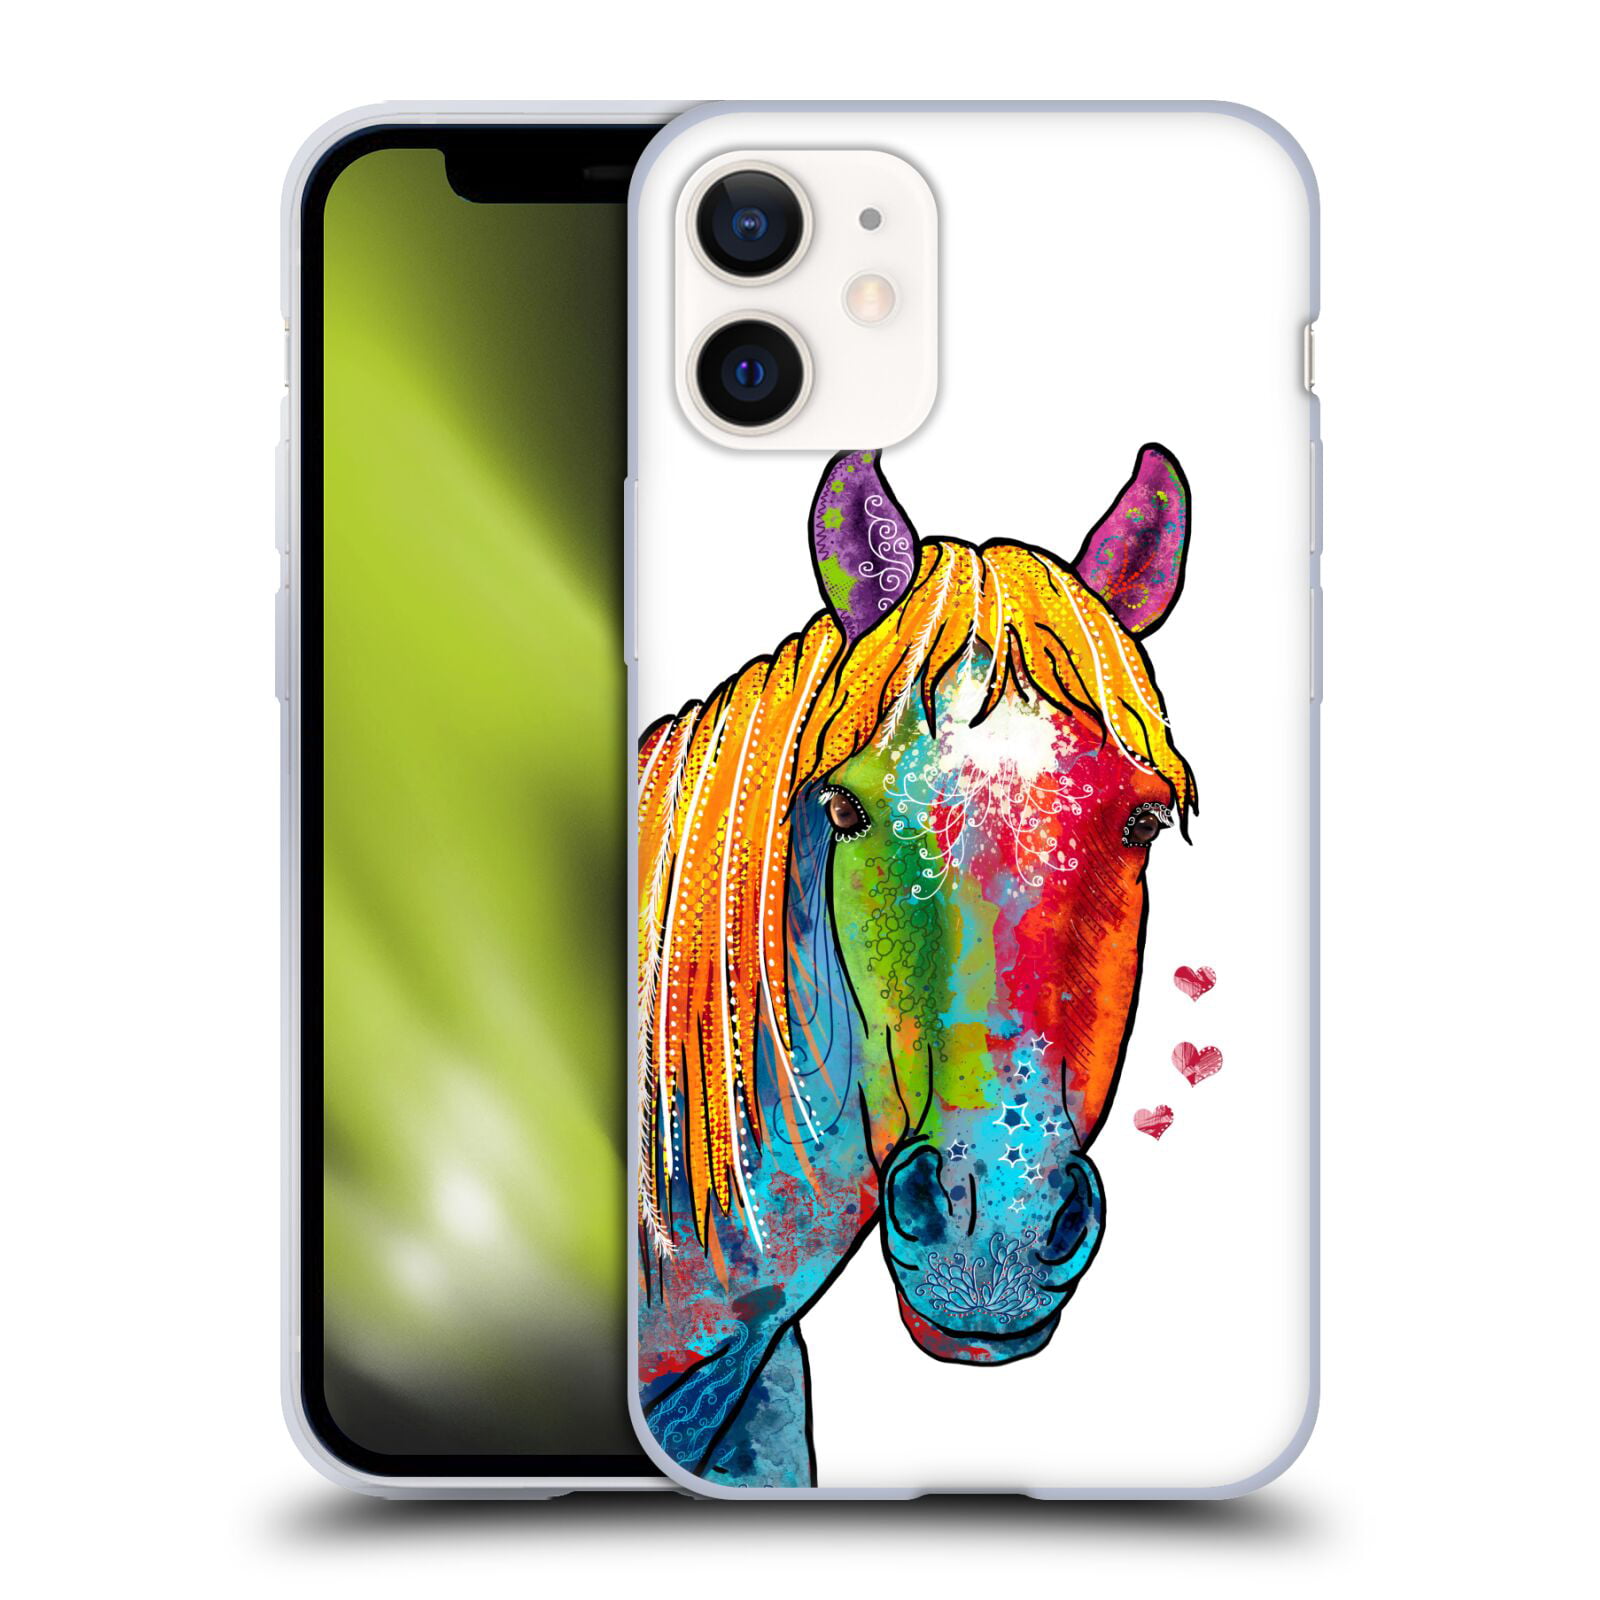 iPhone 8 Head Case Designs Unicorn Spirit Animal Illustrations Hybrid Case for iPhone 7